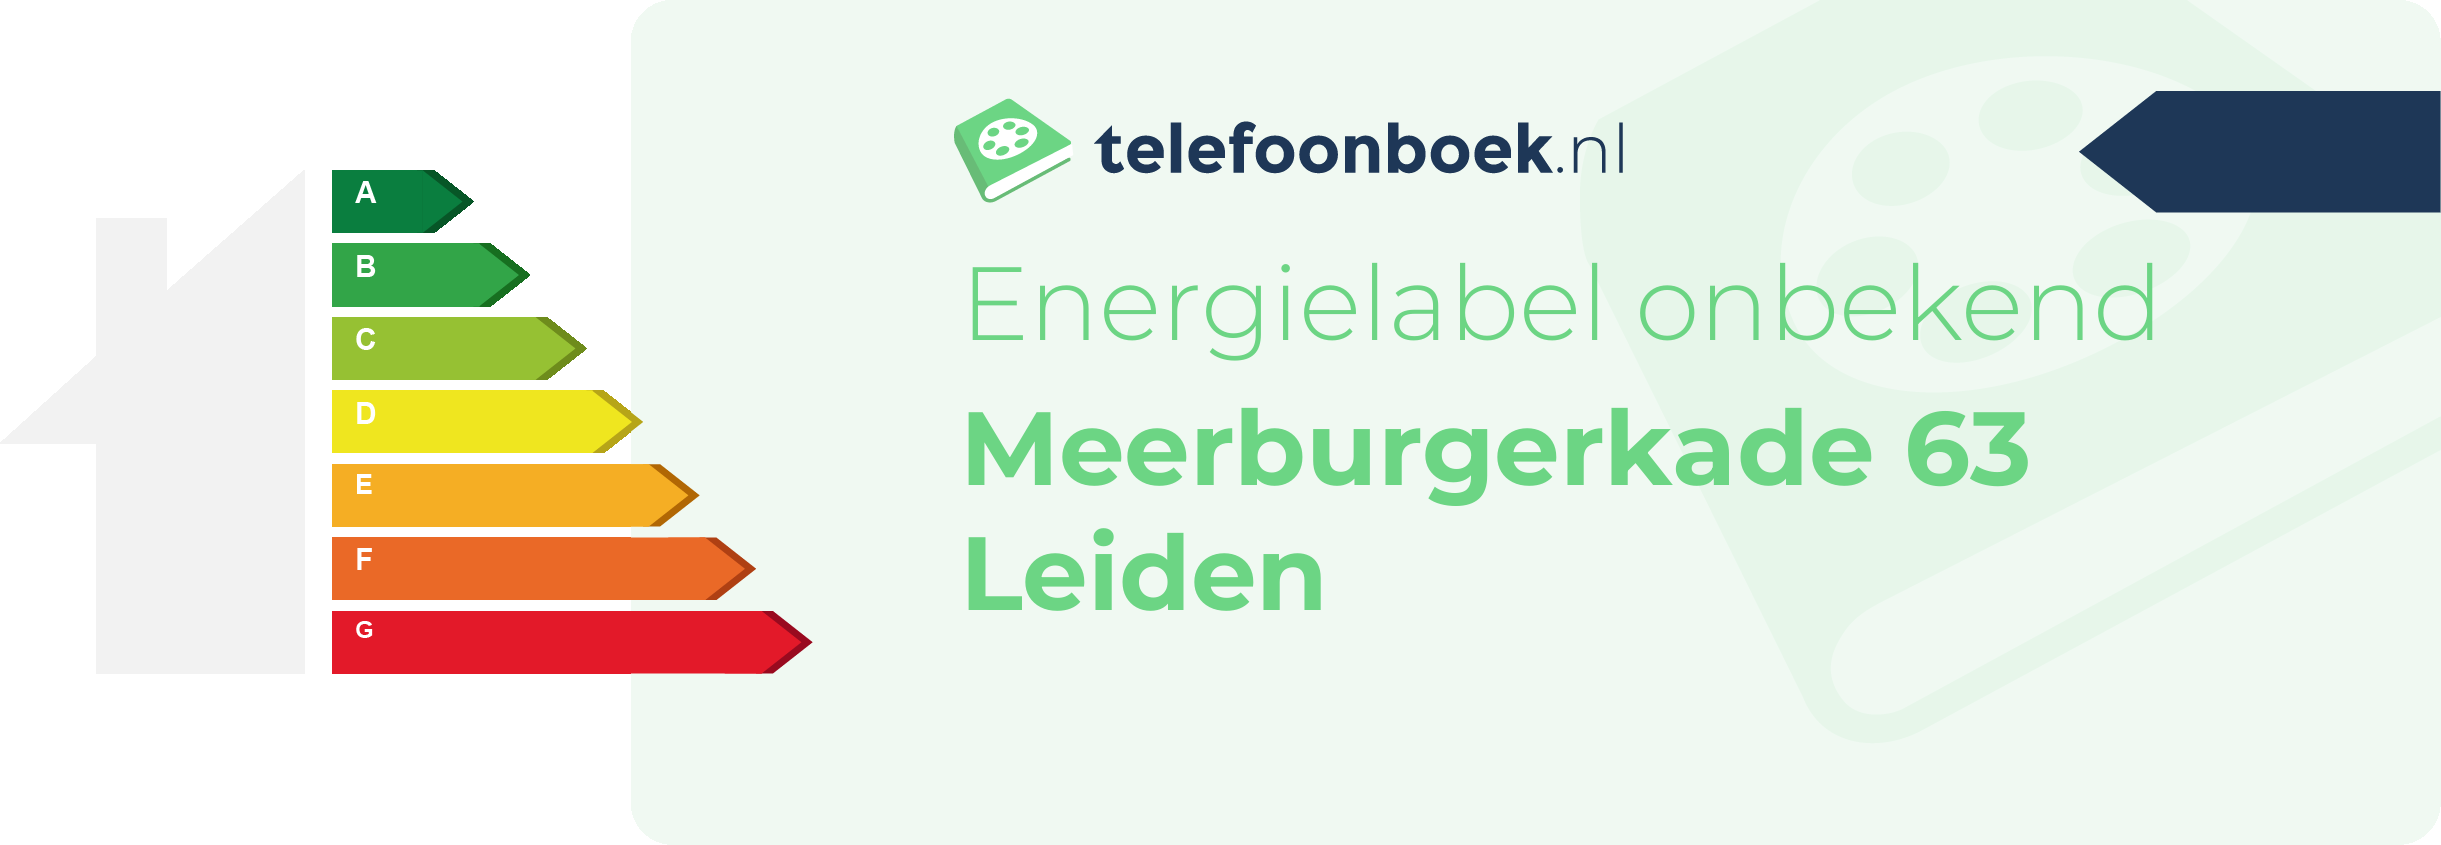 Energielabel Meerburgerkade 63 Leiden